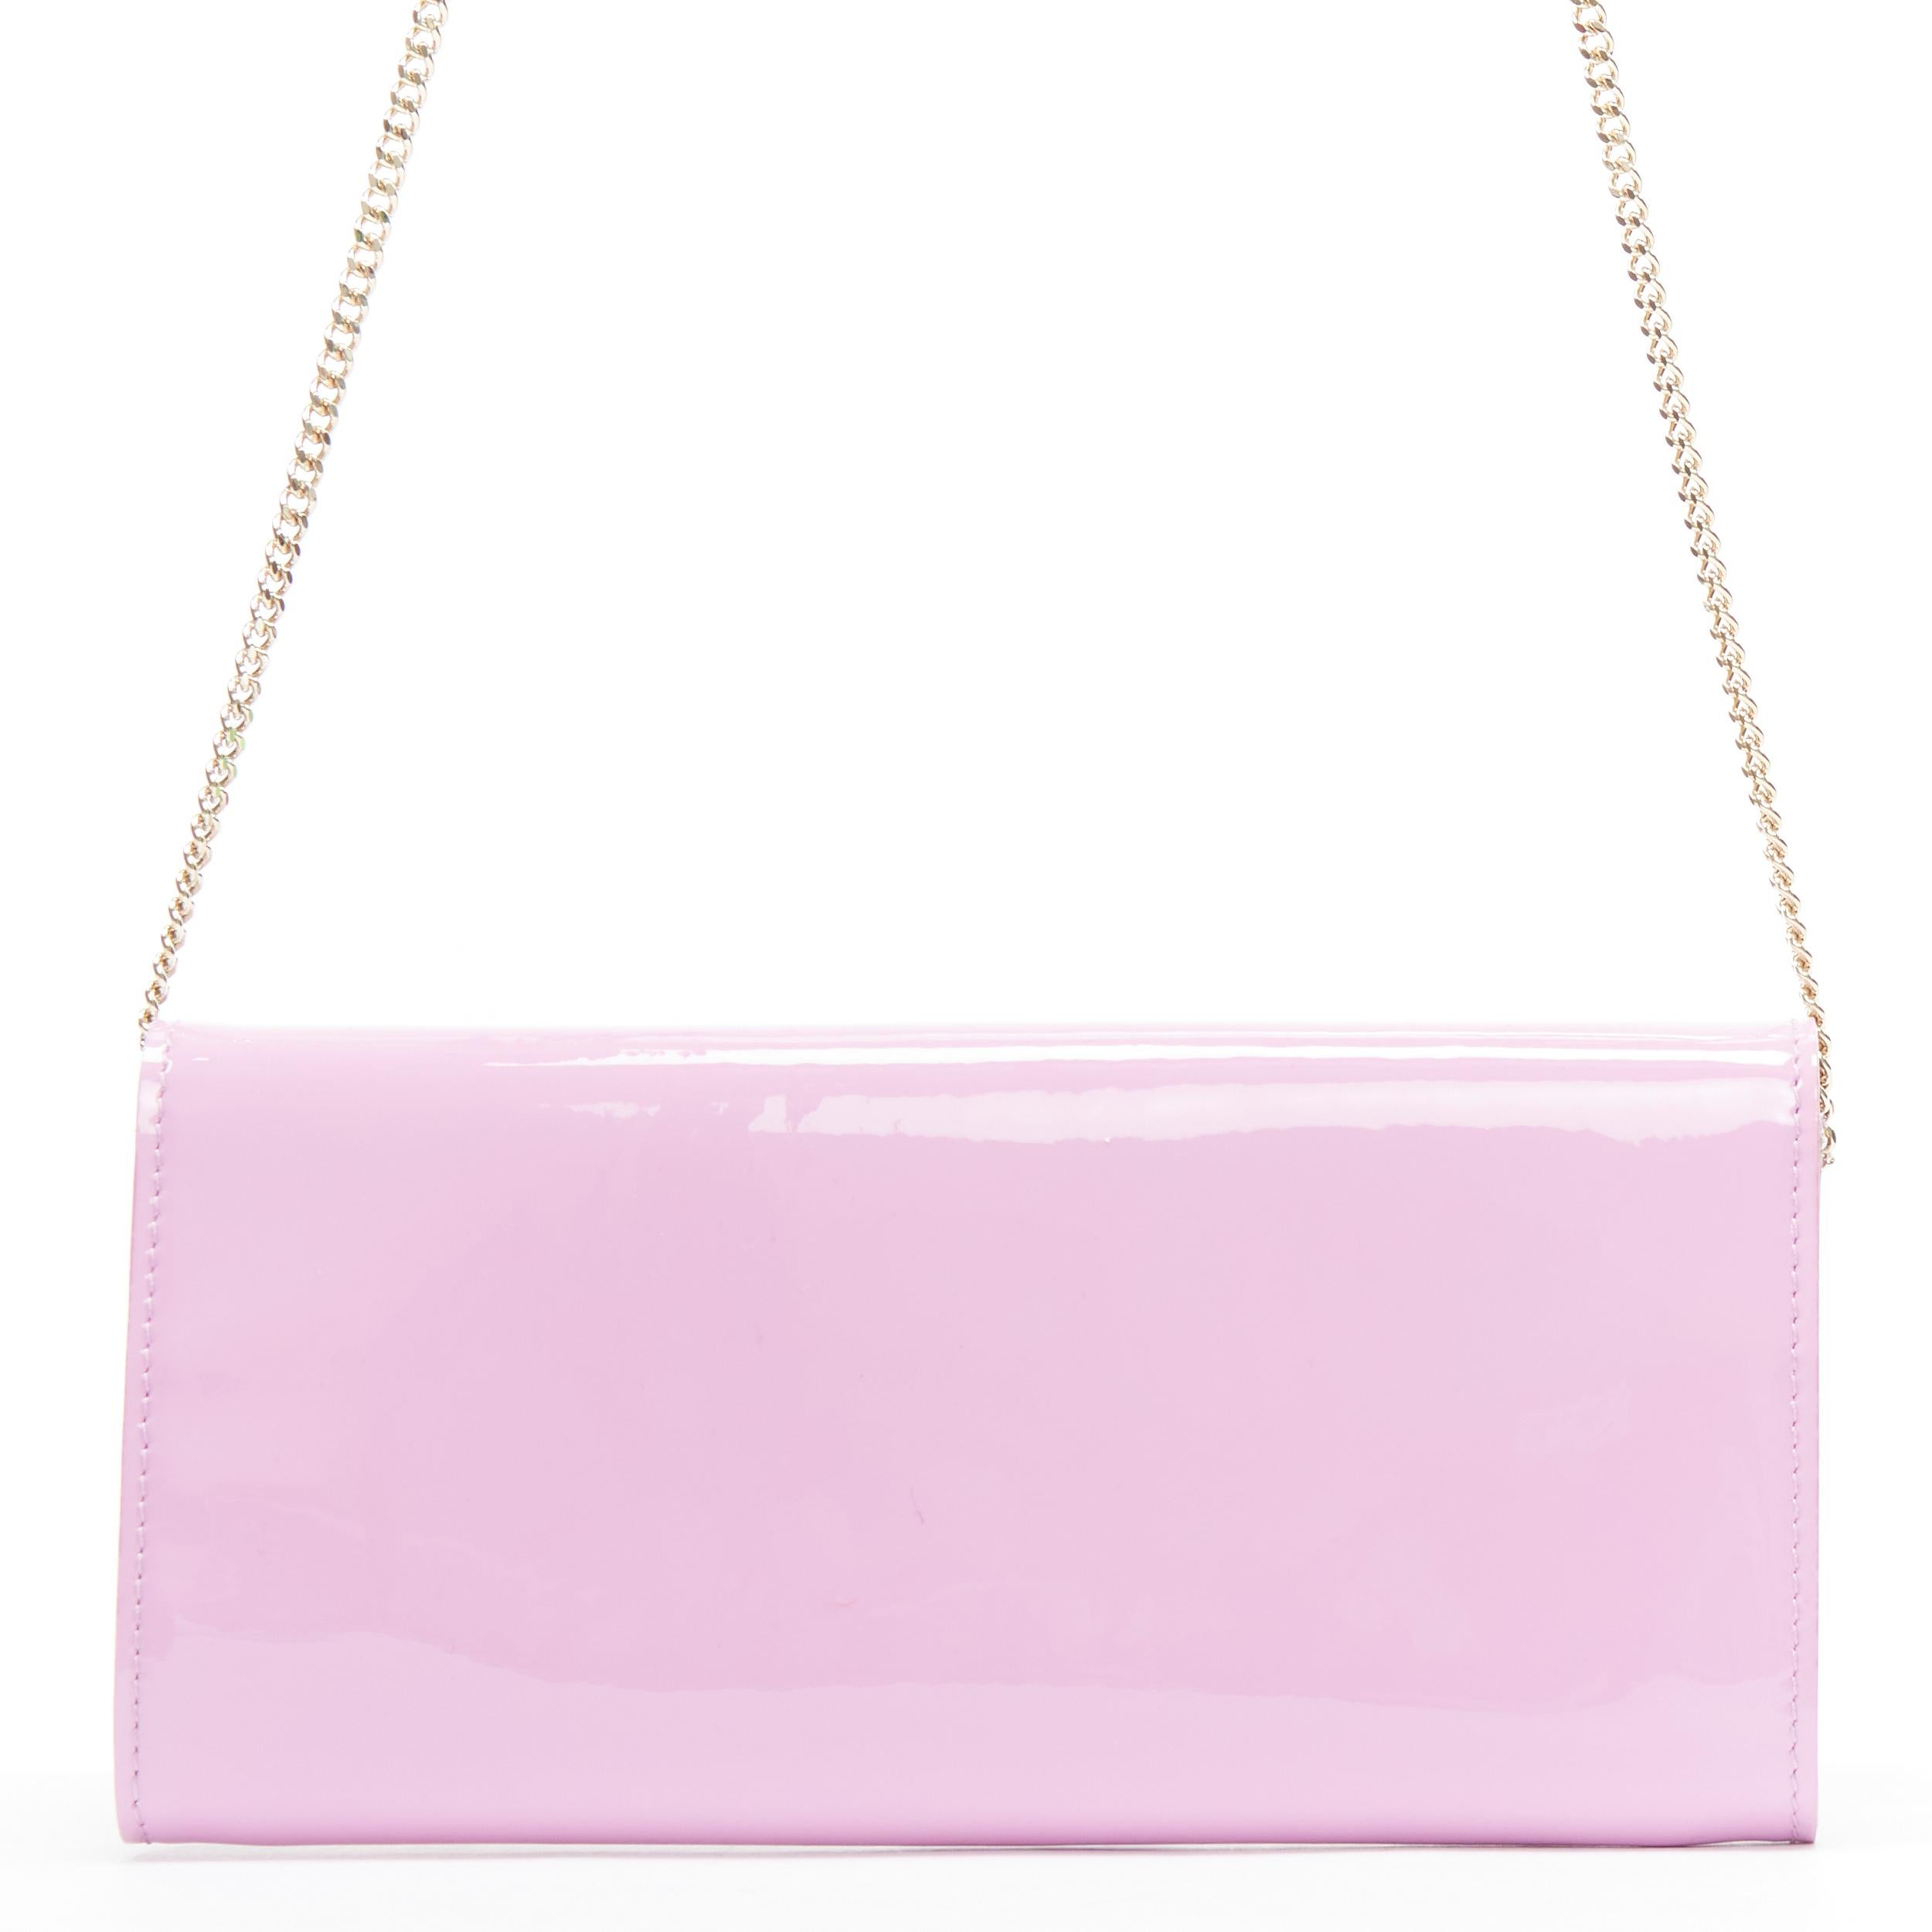 Women's new VERSACE Palazzo Medusa lilac purple patent gold wallet chain crossbody bag